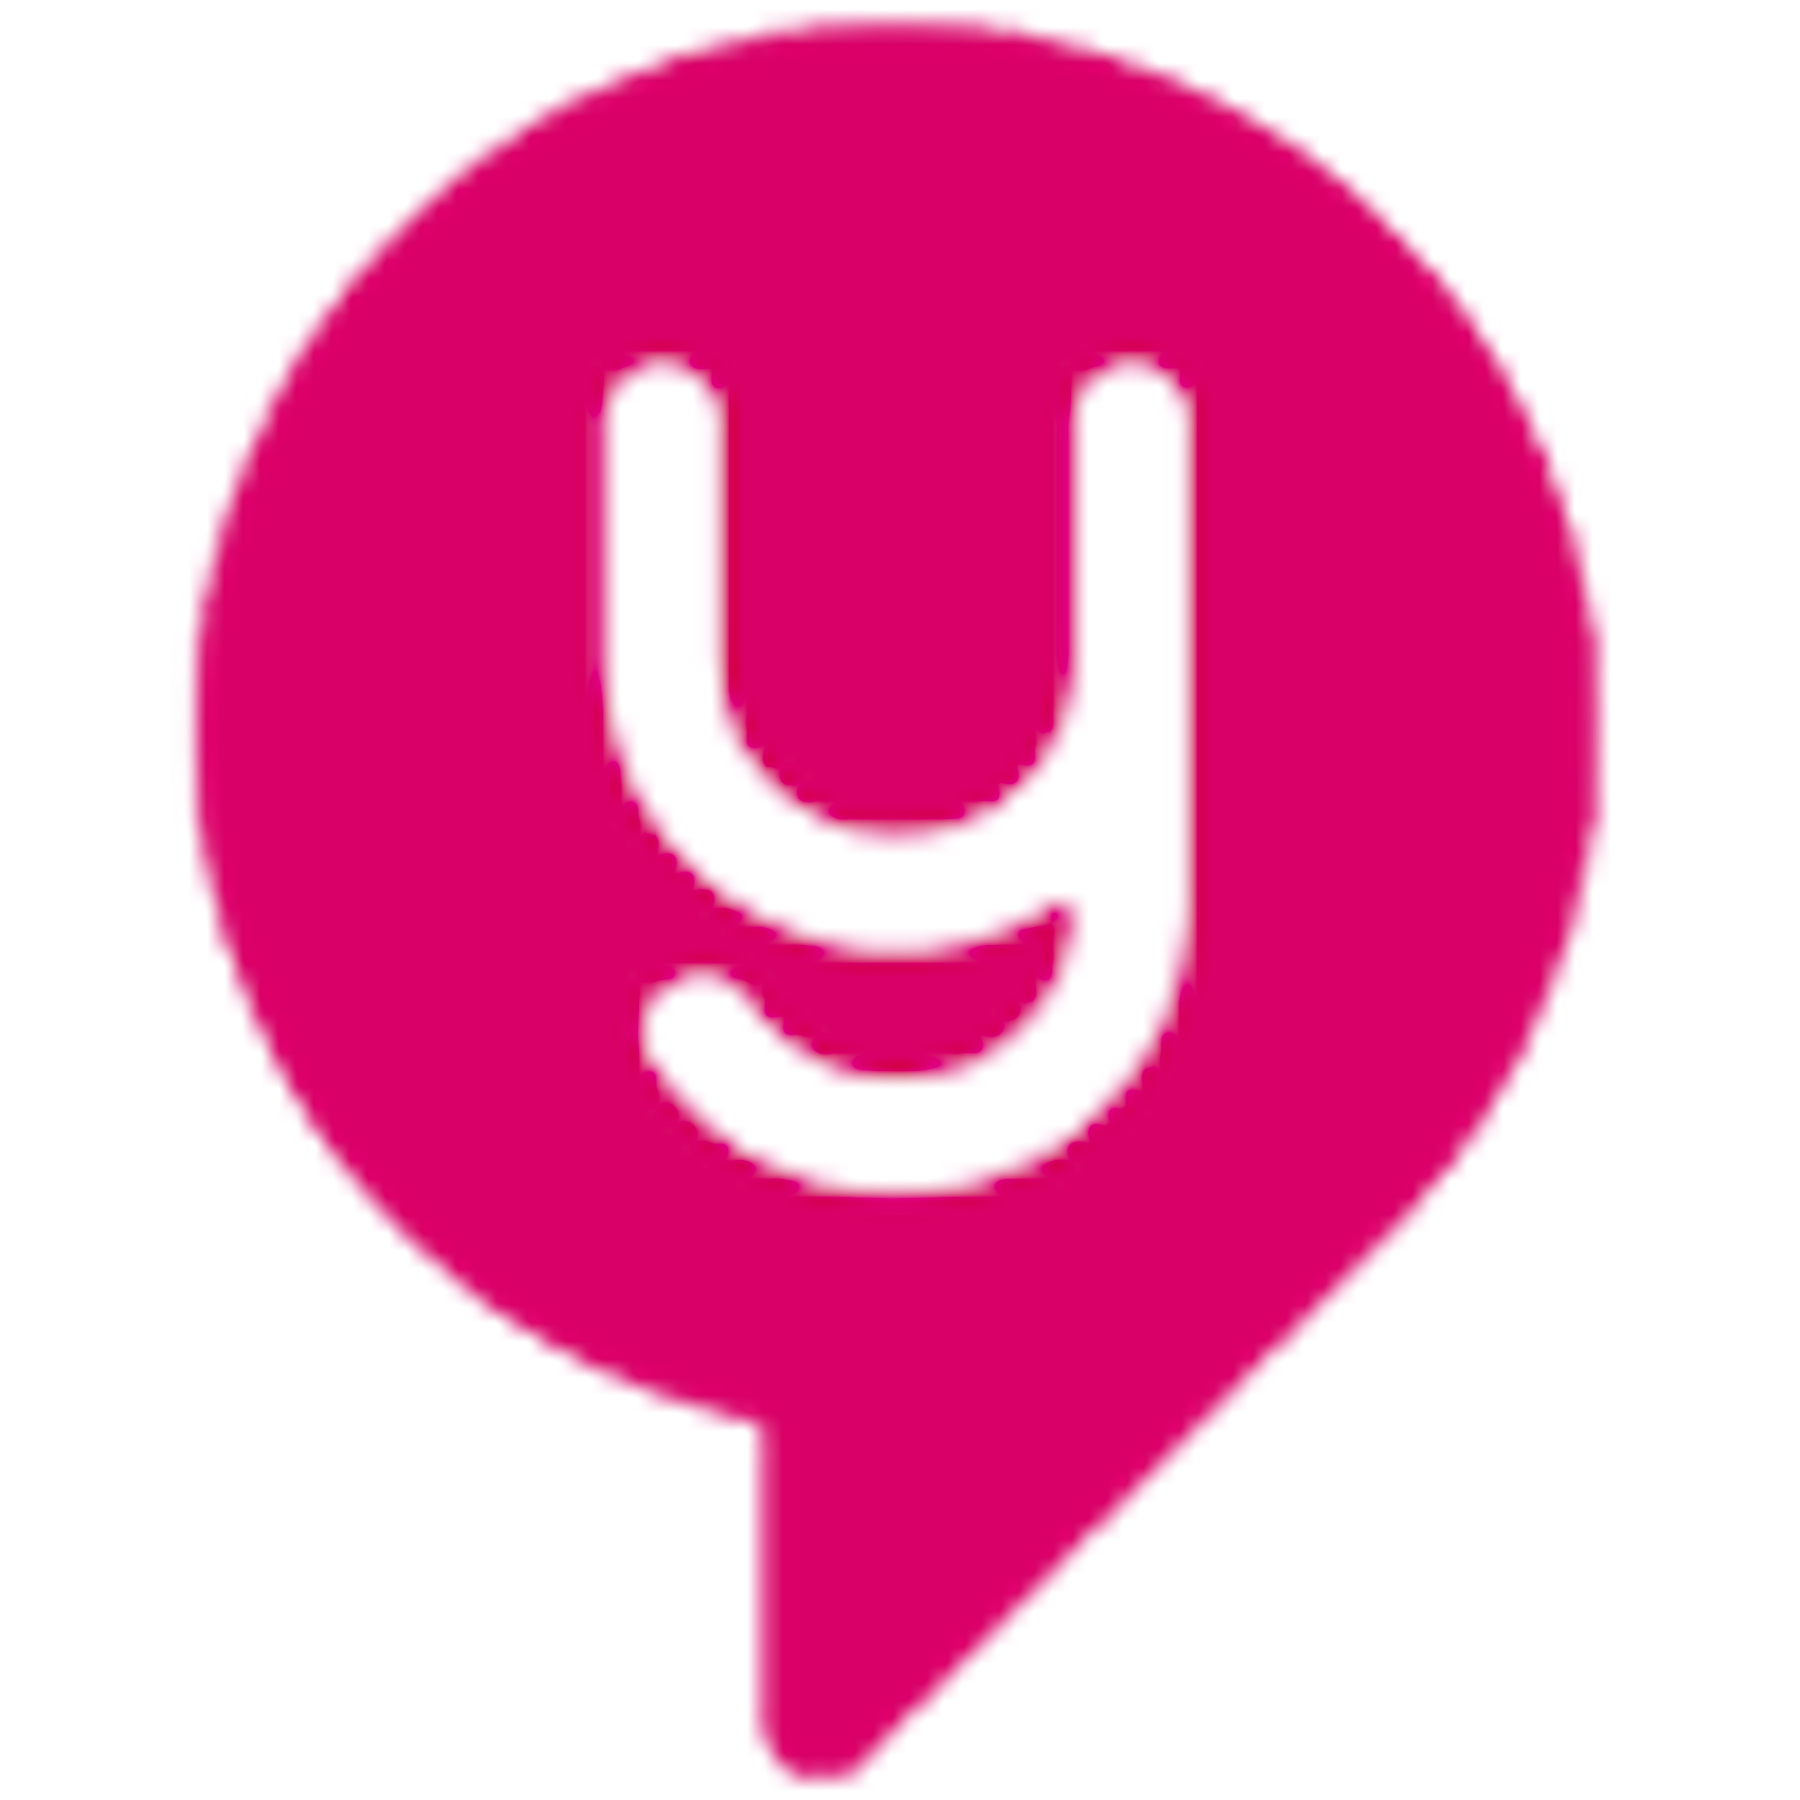 Yumpingo logo